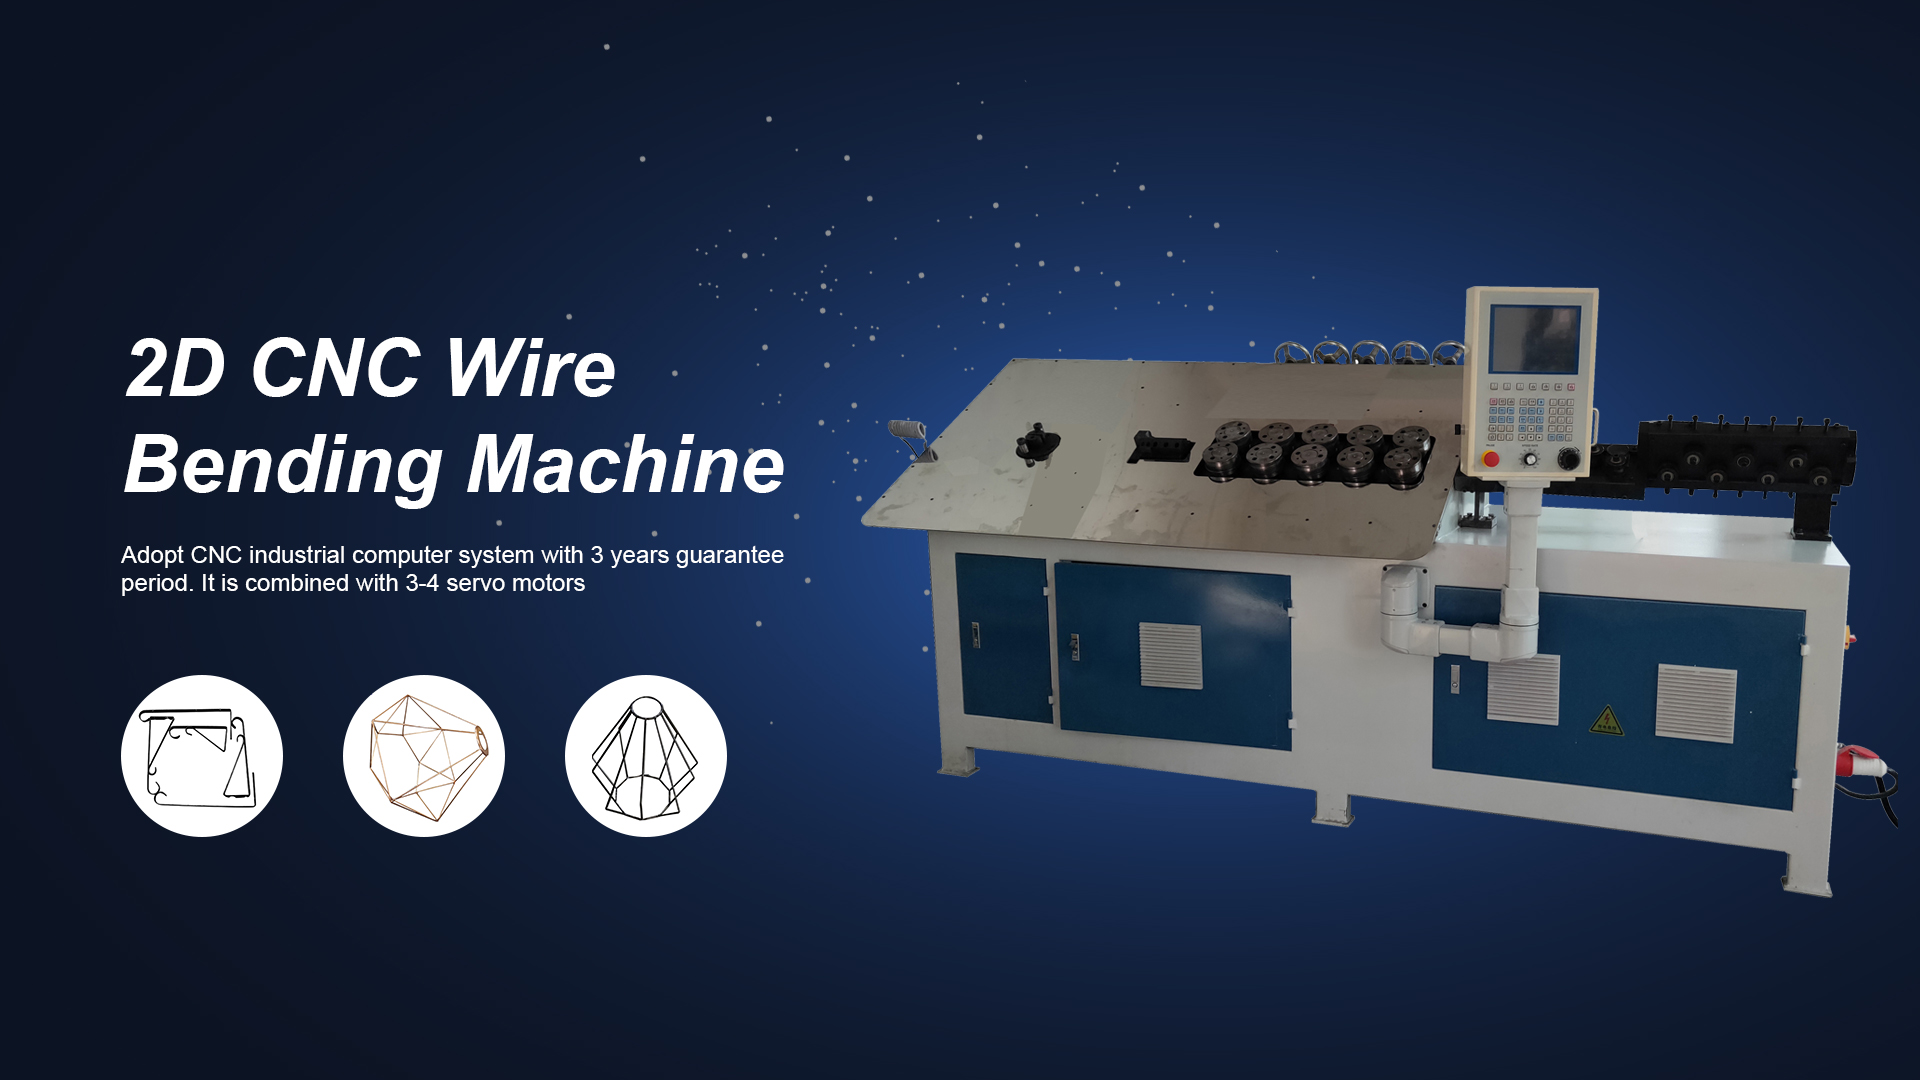 2D CNC Wire Bending Machine